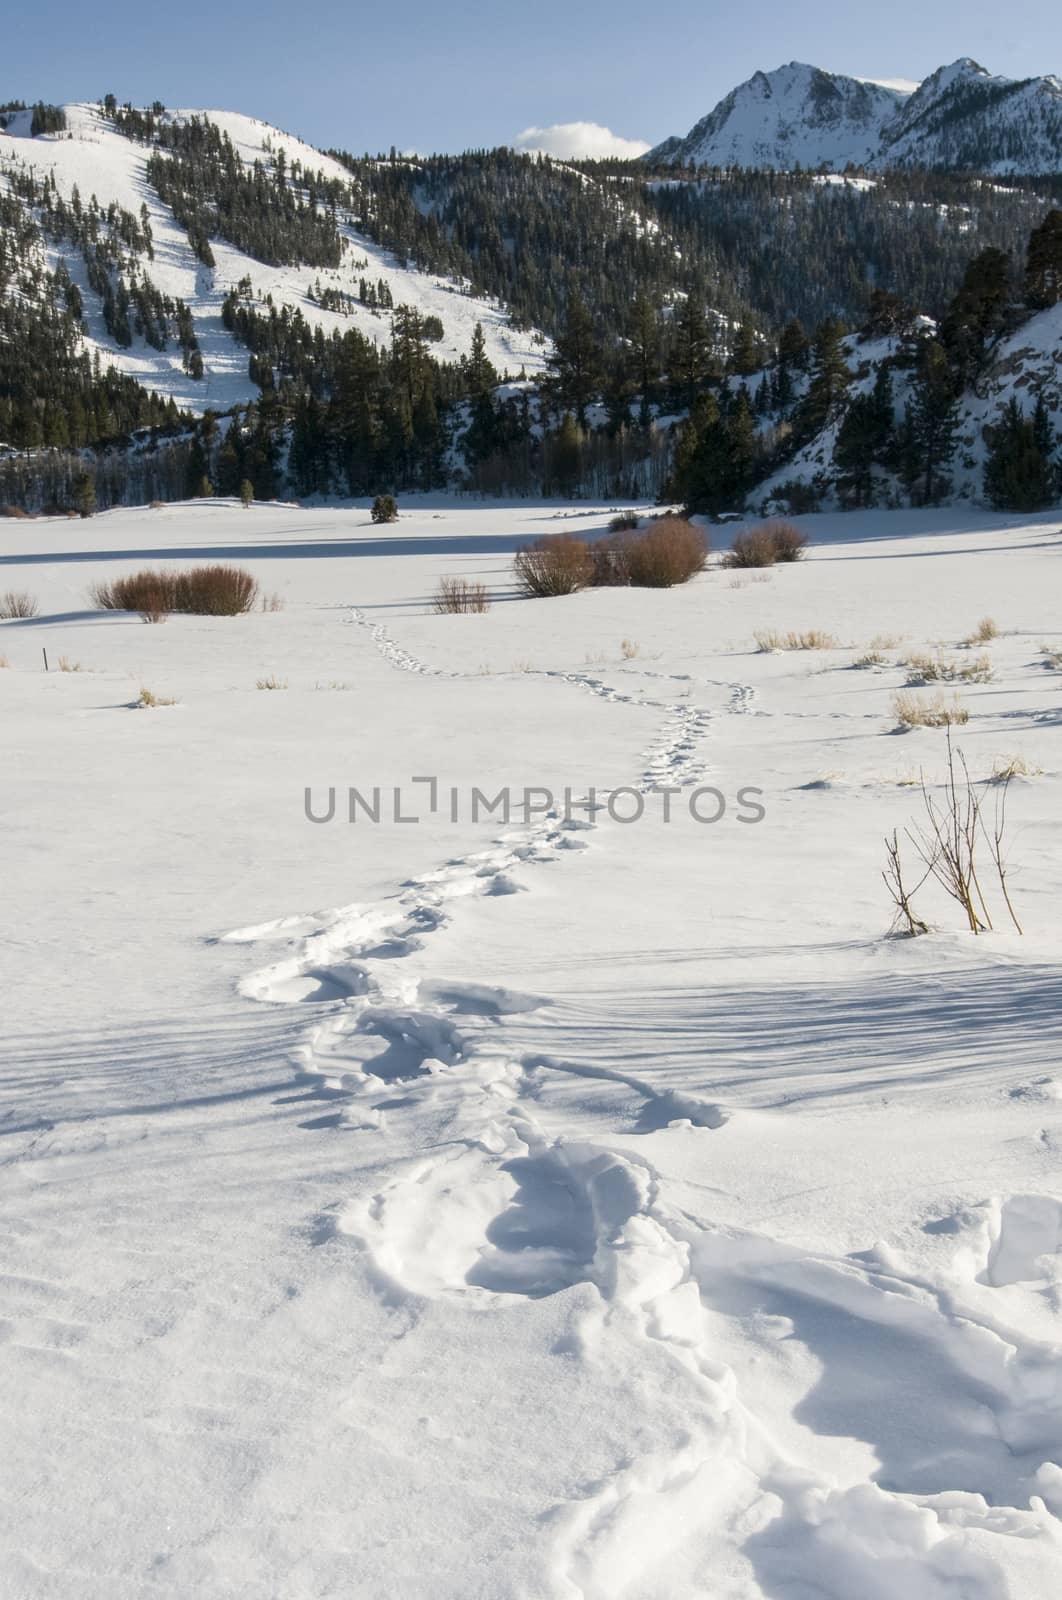 Footprints in the snow, June Lake Road, June Lake, CA by Njean